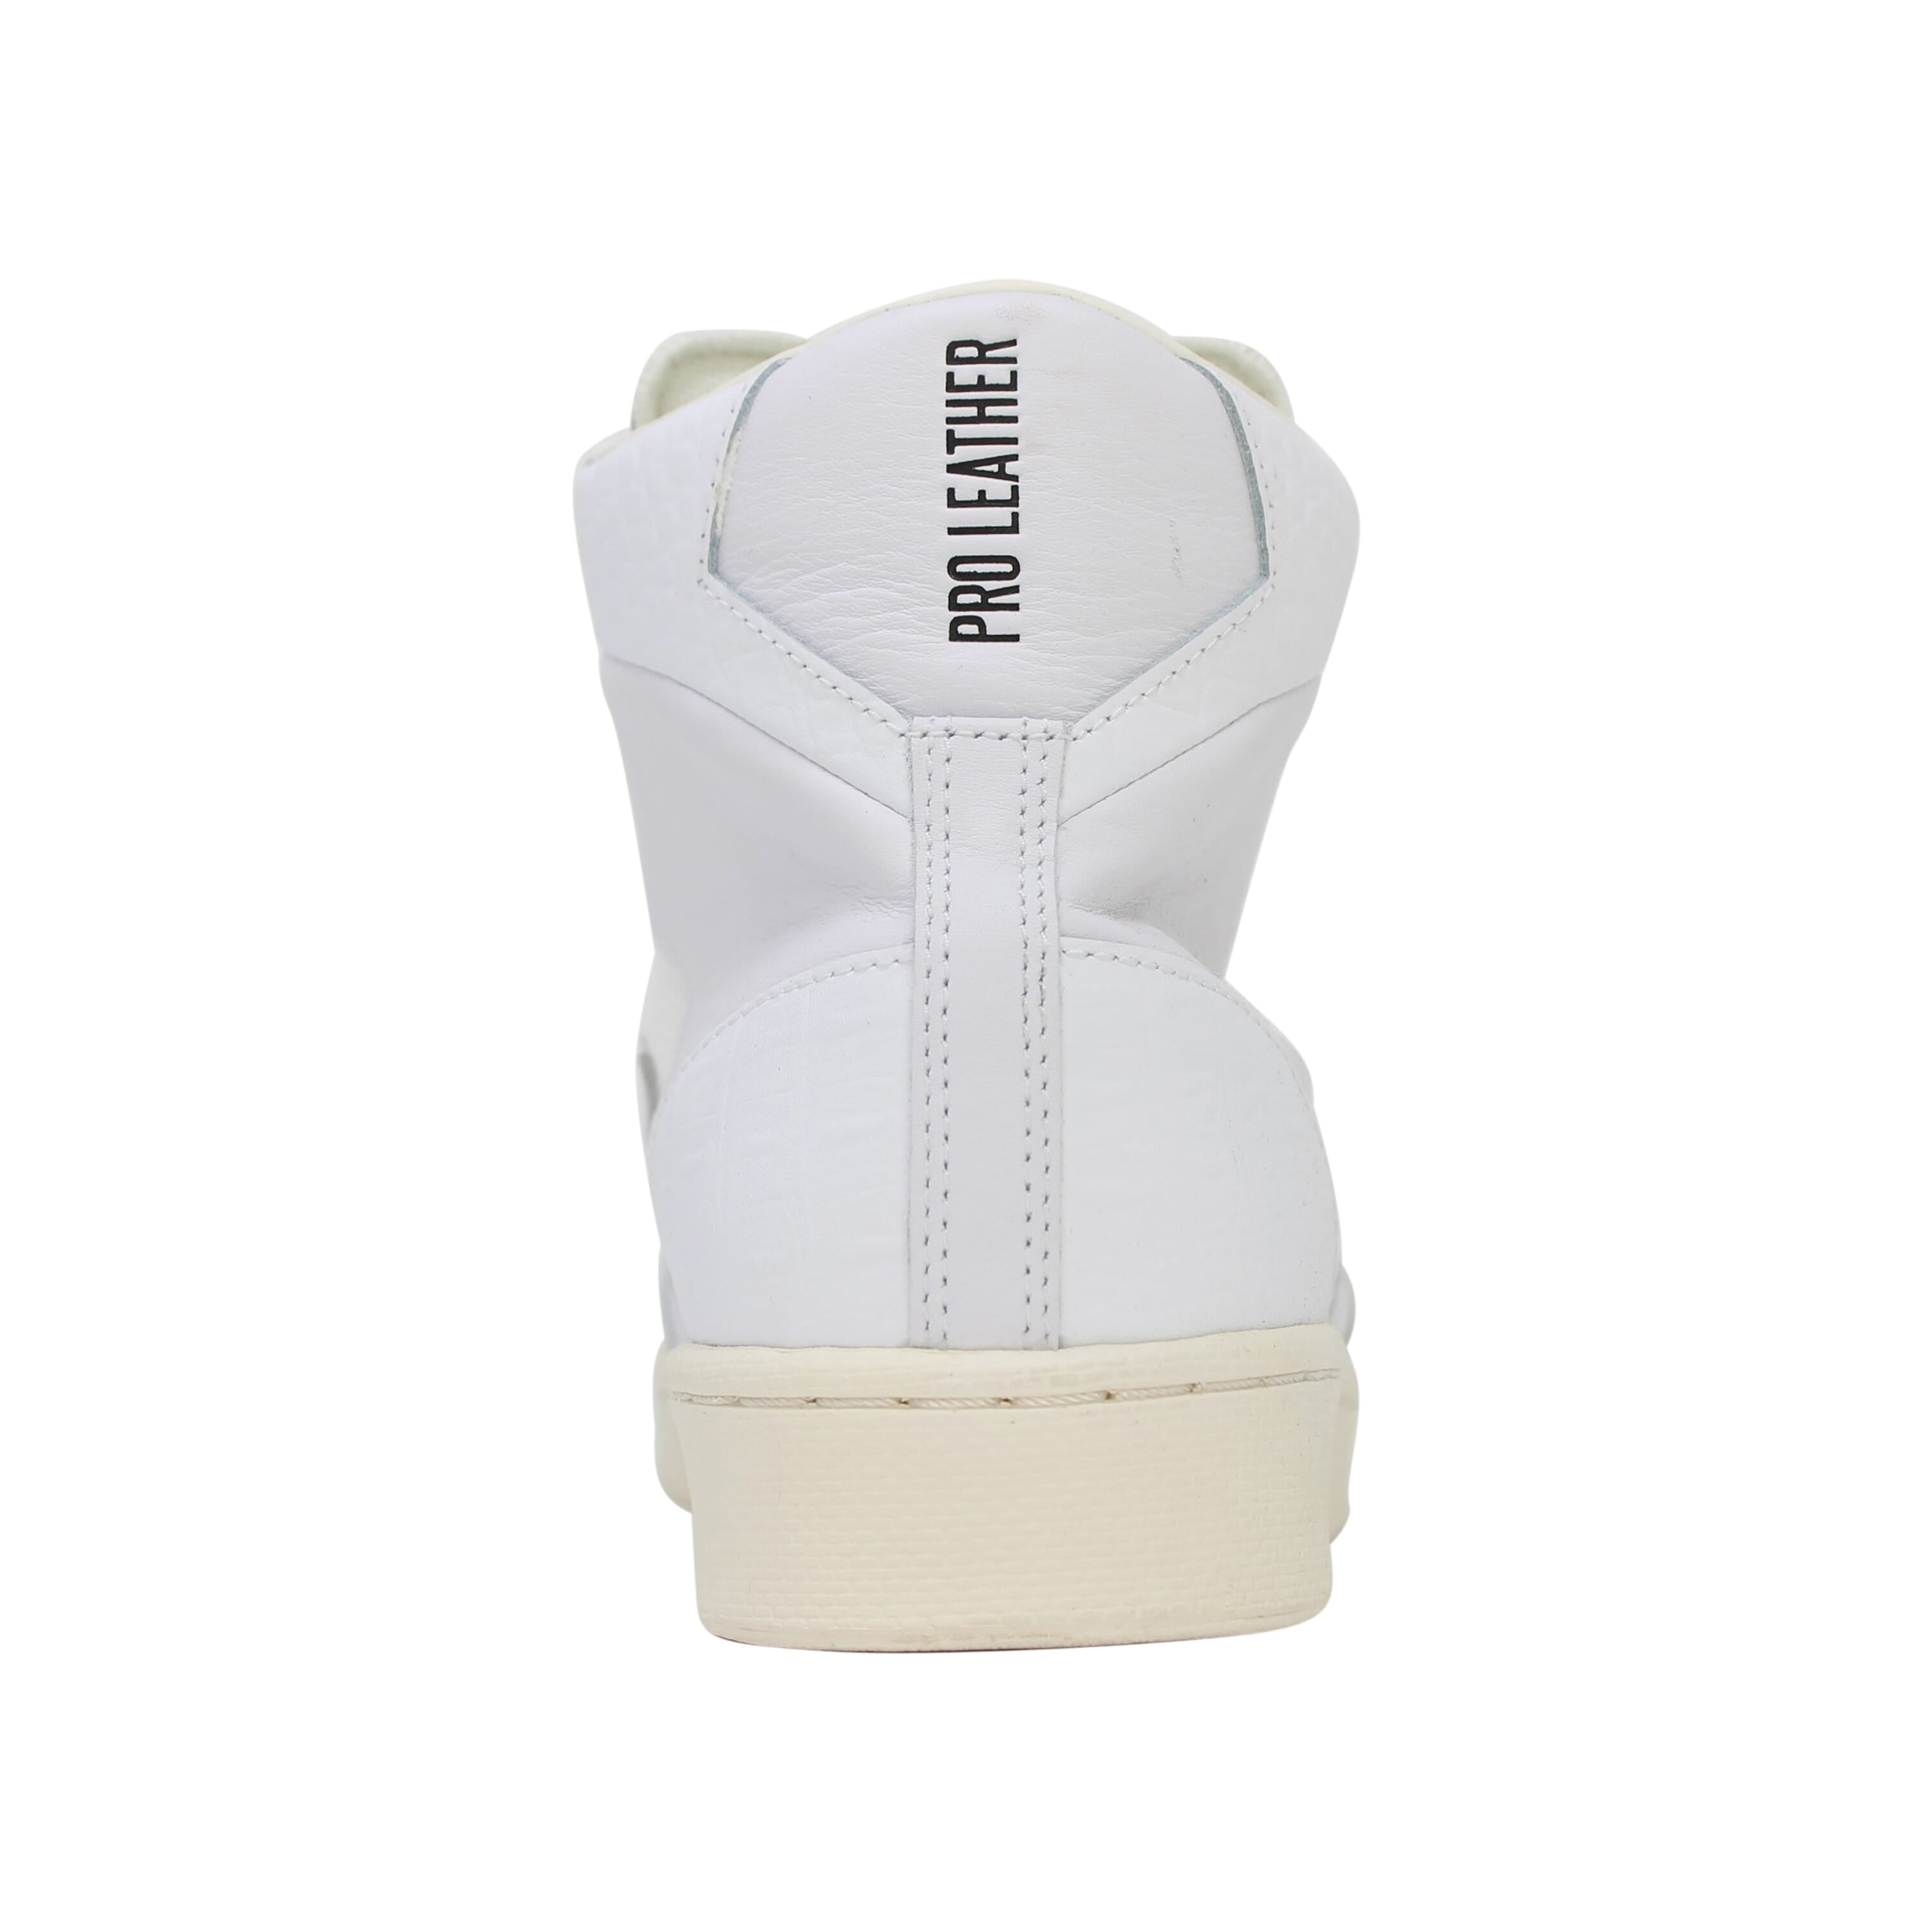 Converse Pro Leather Sport HI White/White/Egret 170902C Men's Size 